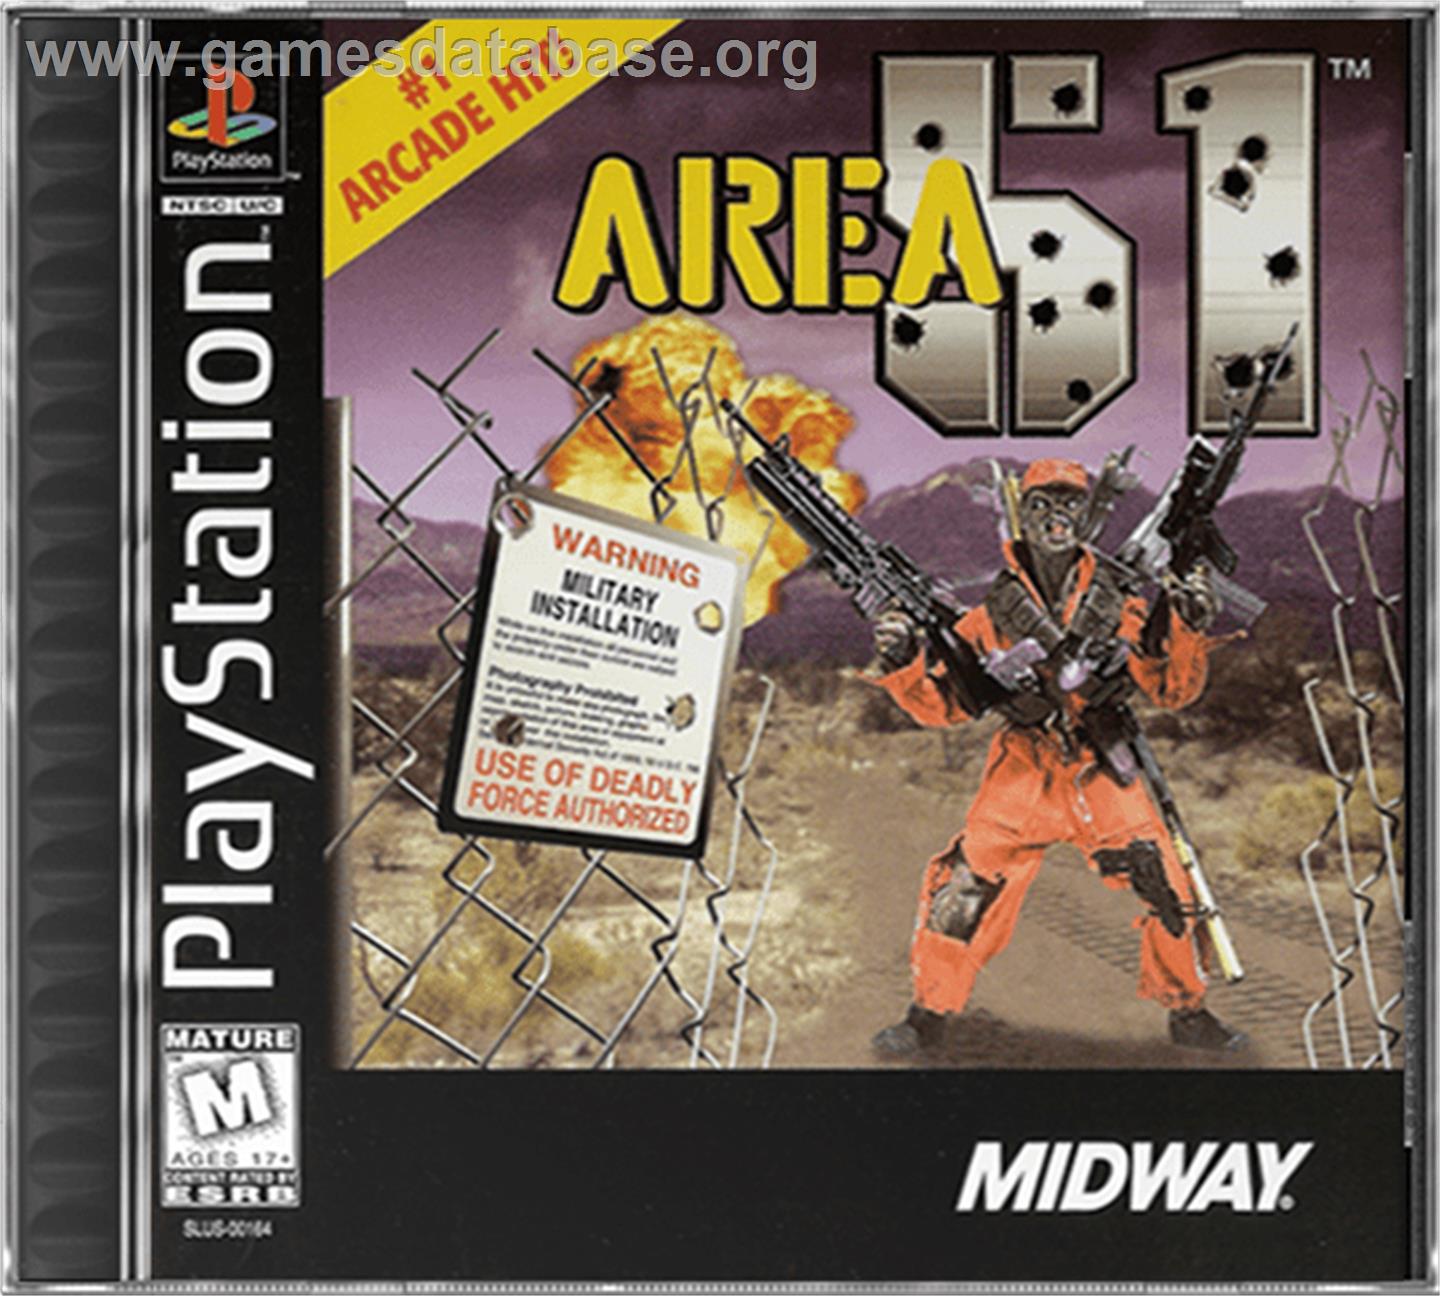 Area 51 - Sony Playstation - Artwork - Box